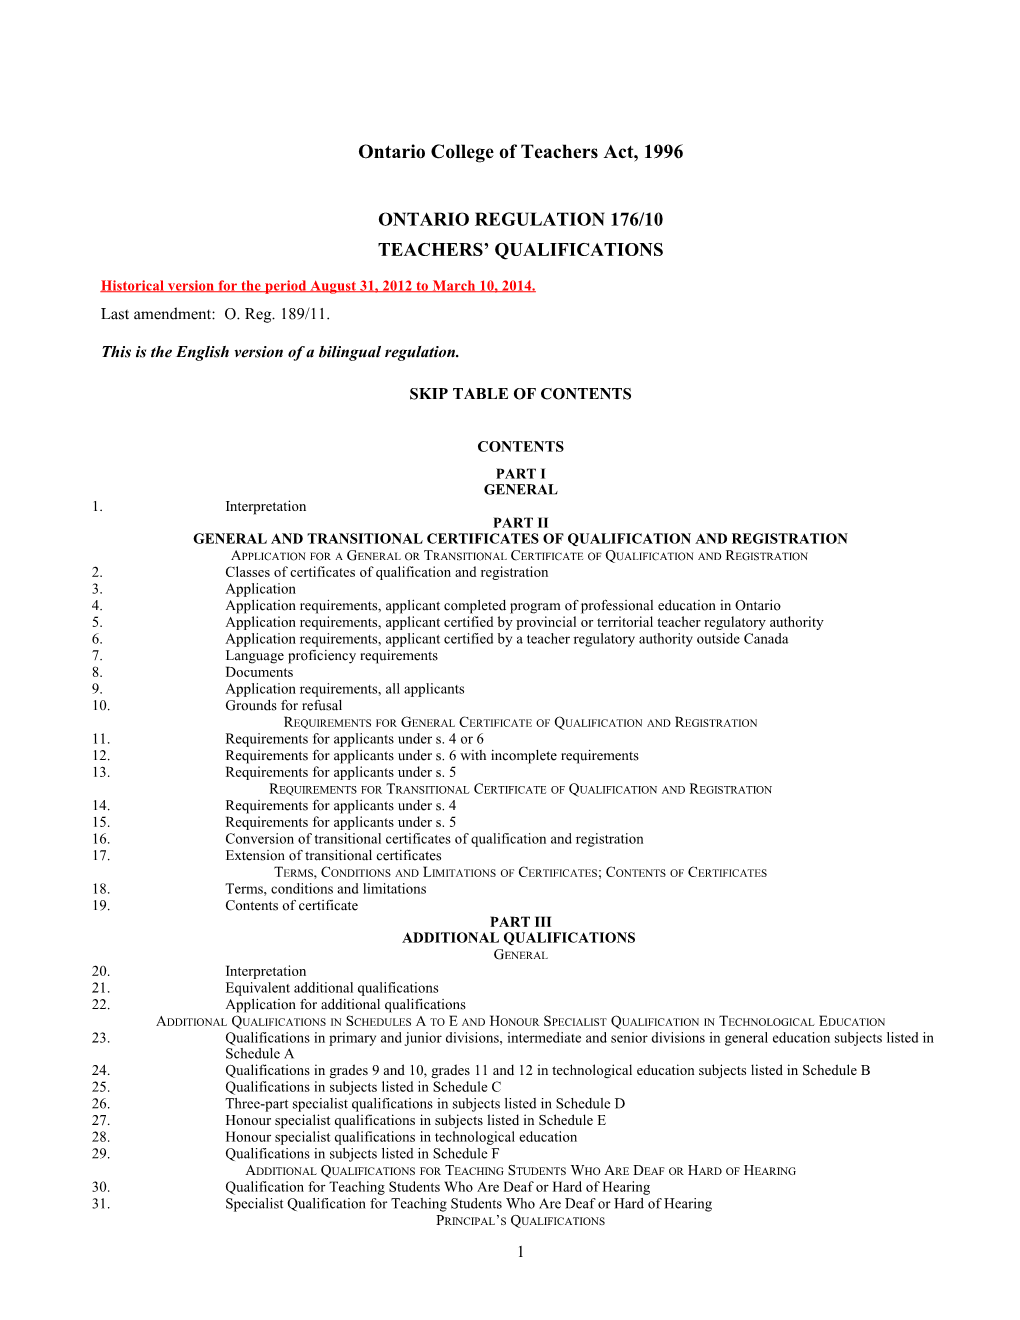 Ontario College of Teachers Act, 1996 - O. Reg. 176/10